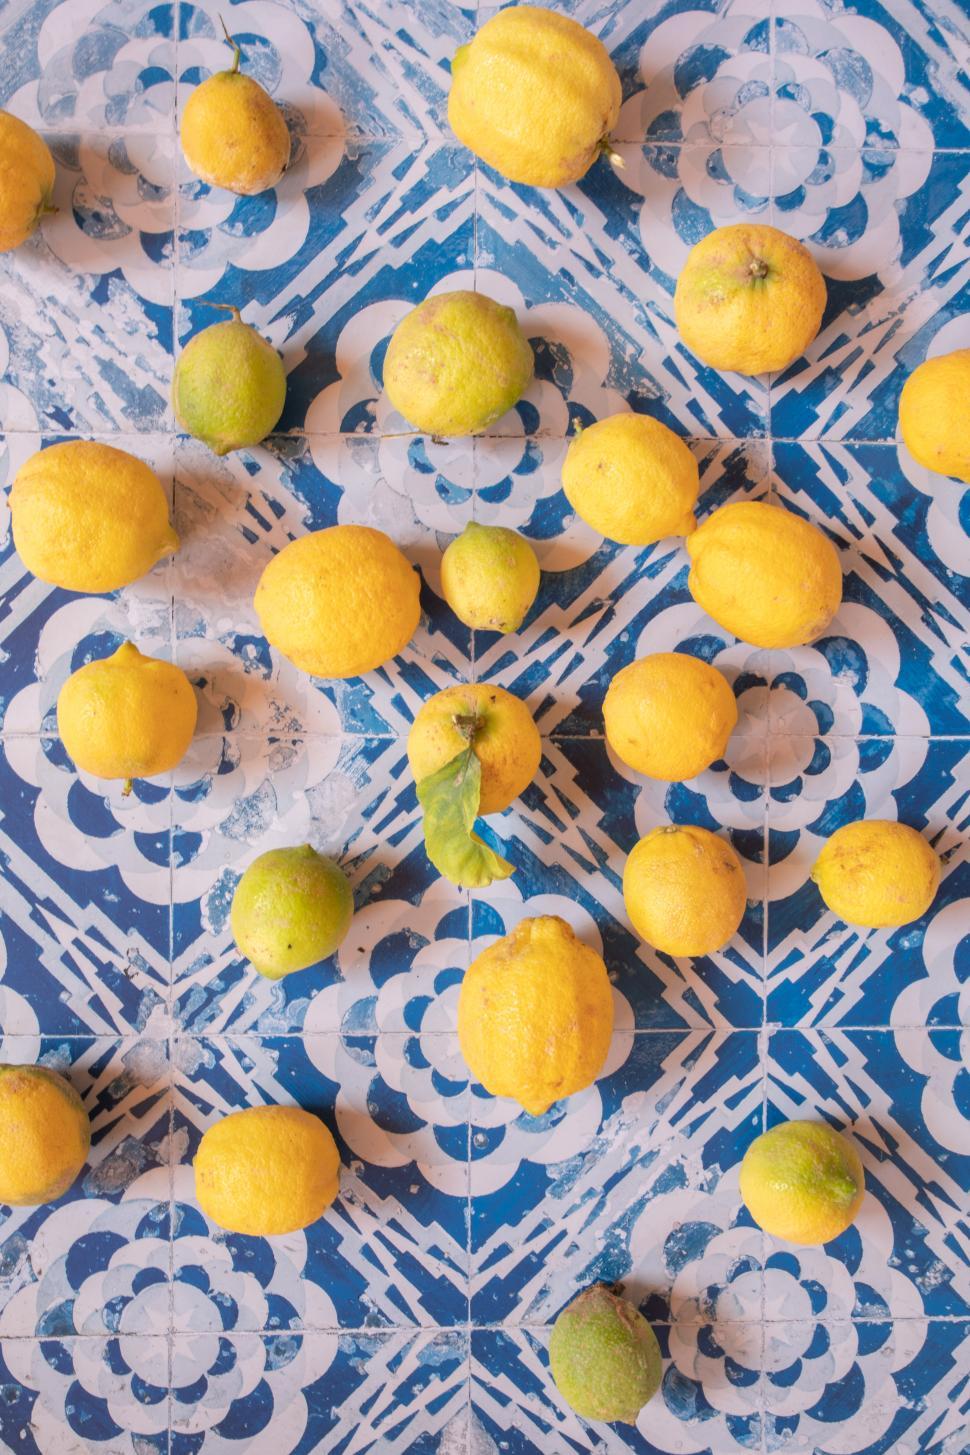 Free Image of lemon and citrus still life 